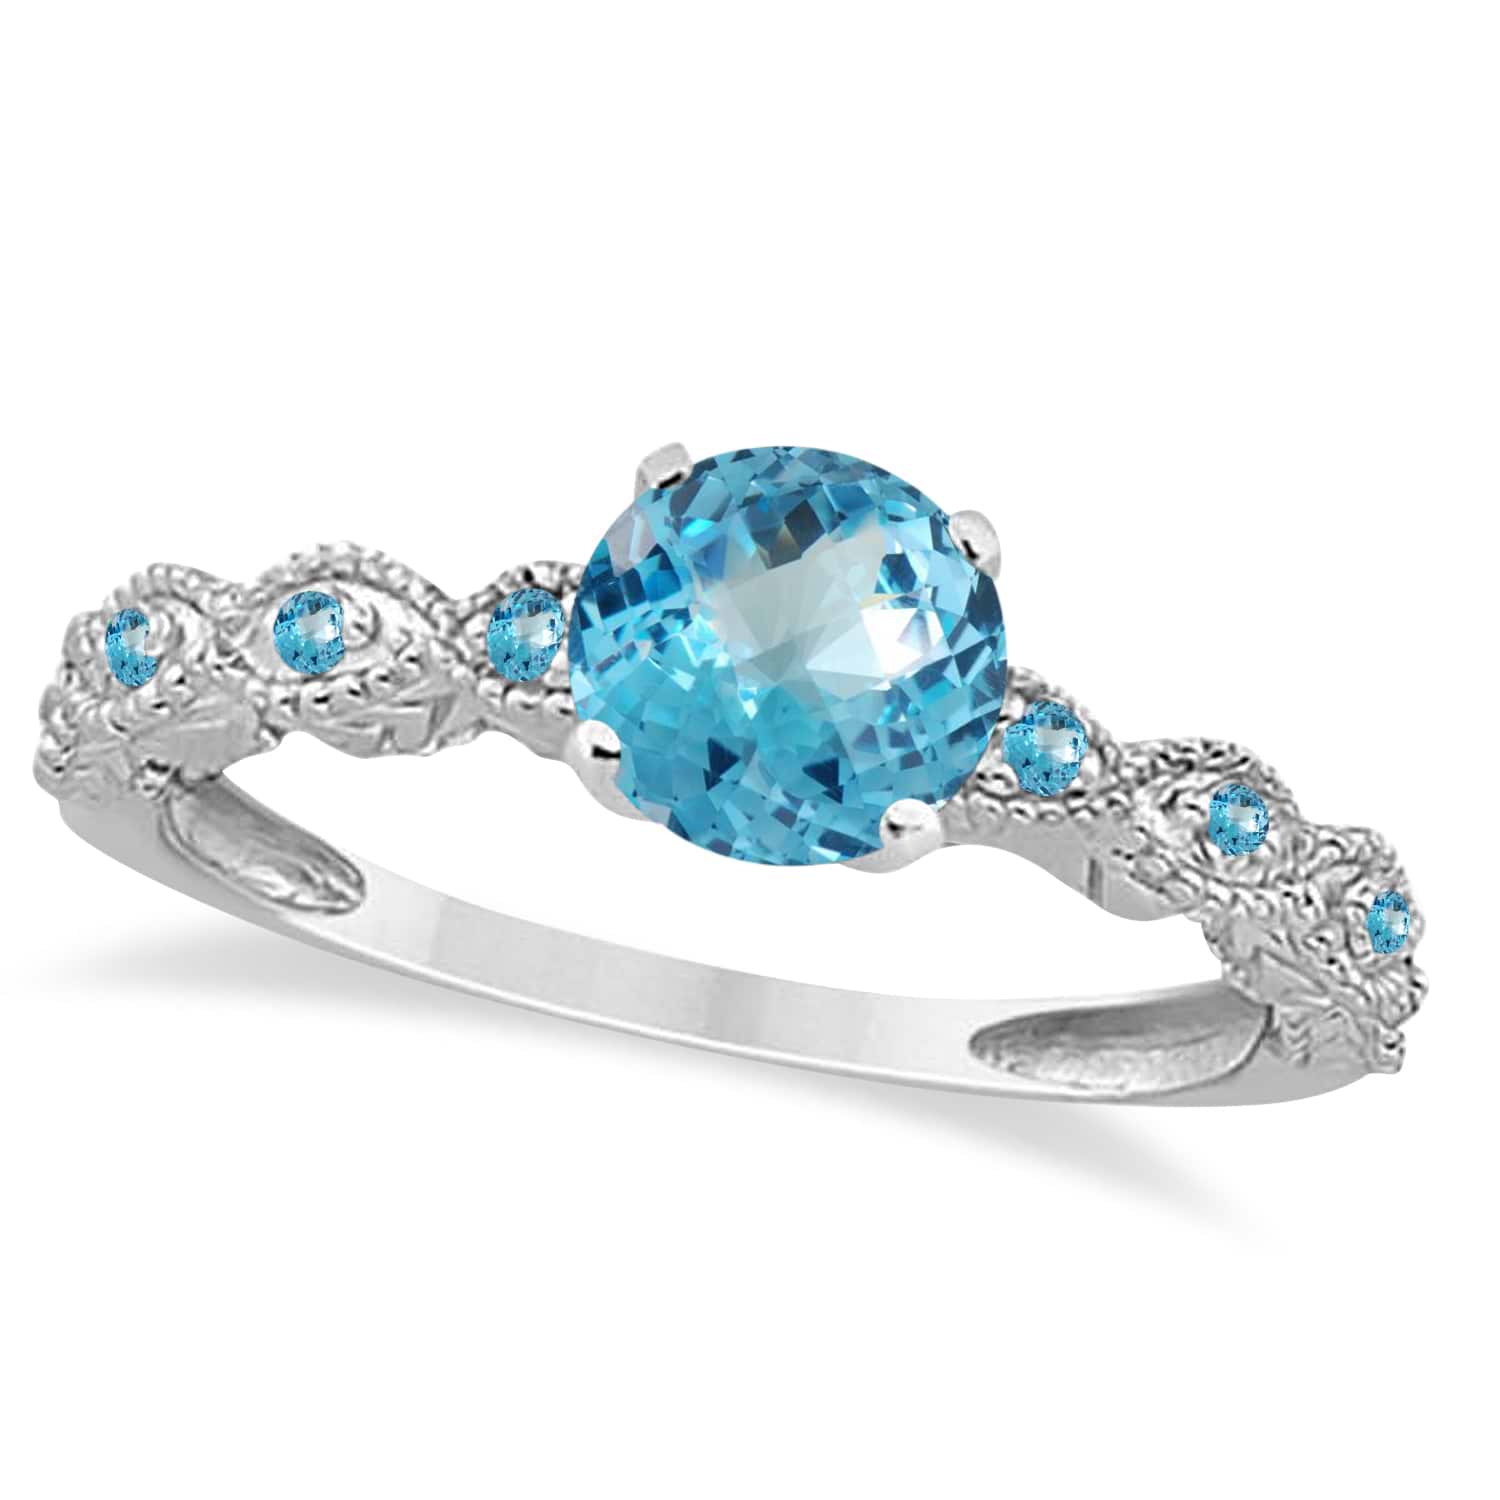 Vintage Style Blue Topaz Engagement Ring 14k White Gold (1.18ct)